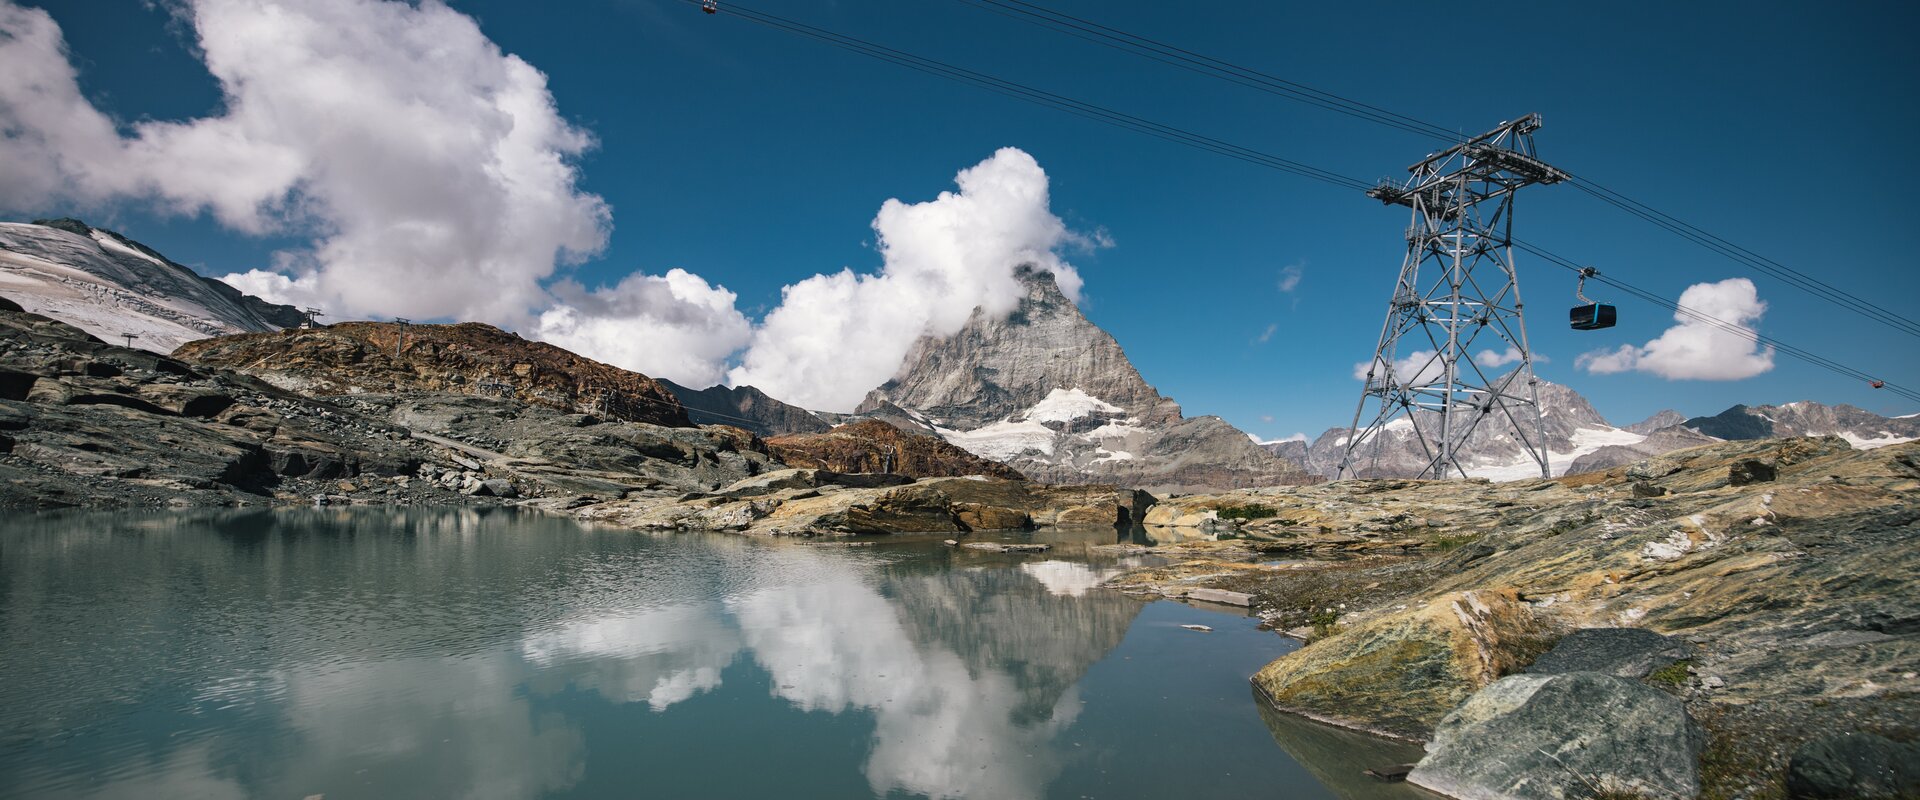 The Theodulsee on Trockener Steg, the Matterhorn and the gondolas of the Glacier Ride | © Mitch Pitmann